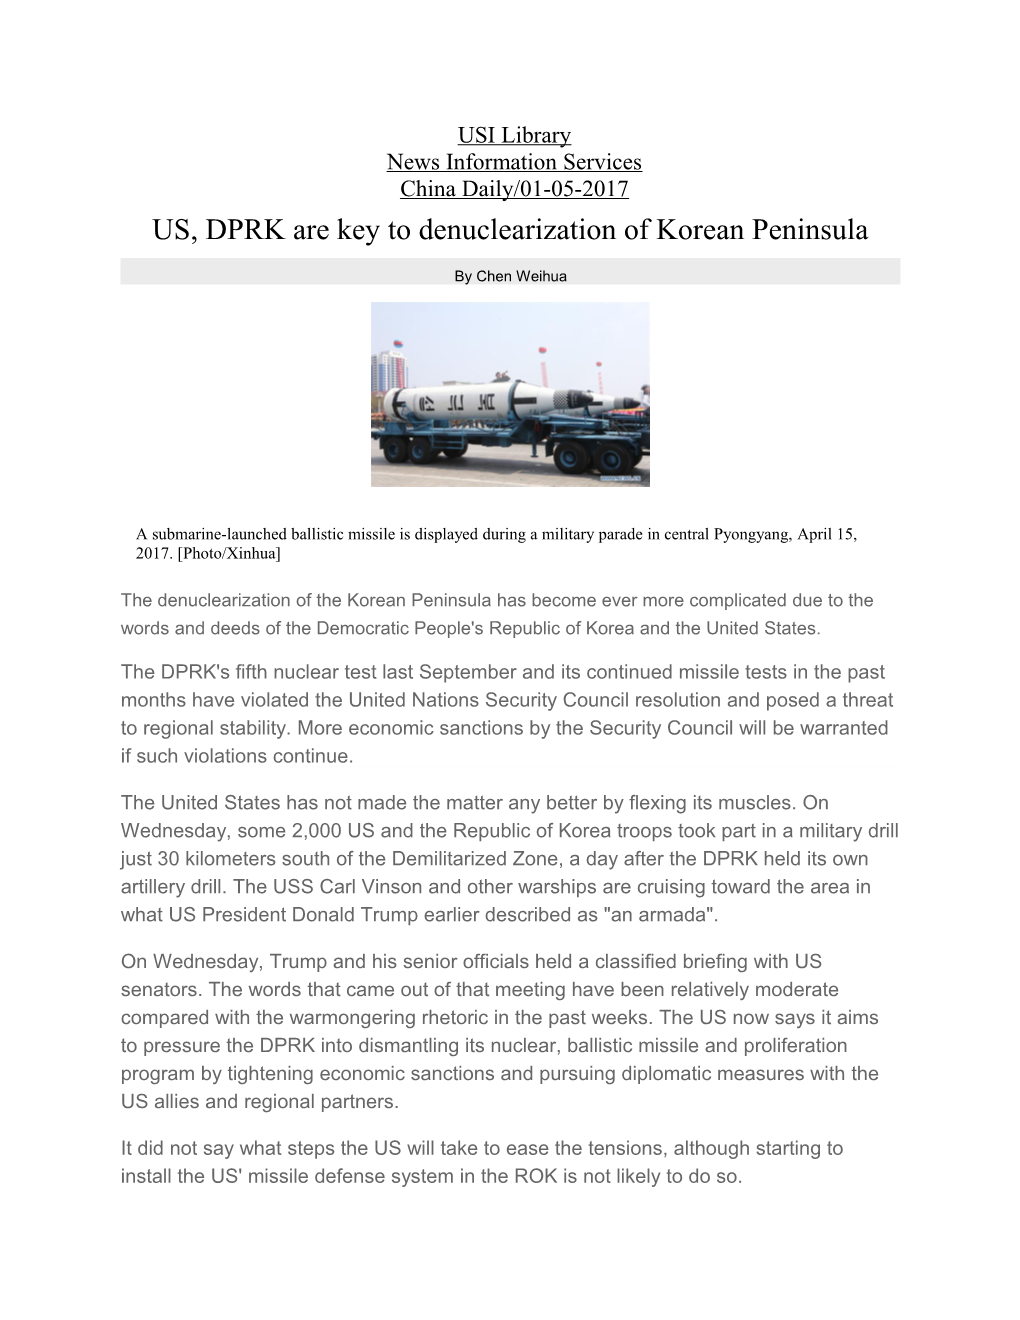 US, DPRK Are Key to Denuclearization of Korean Peninsula